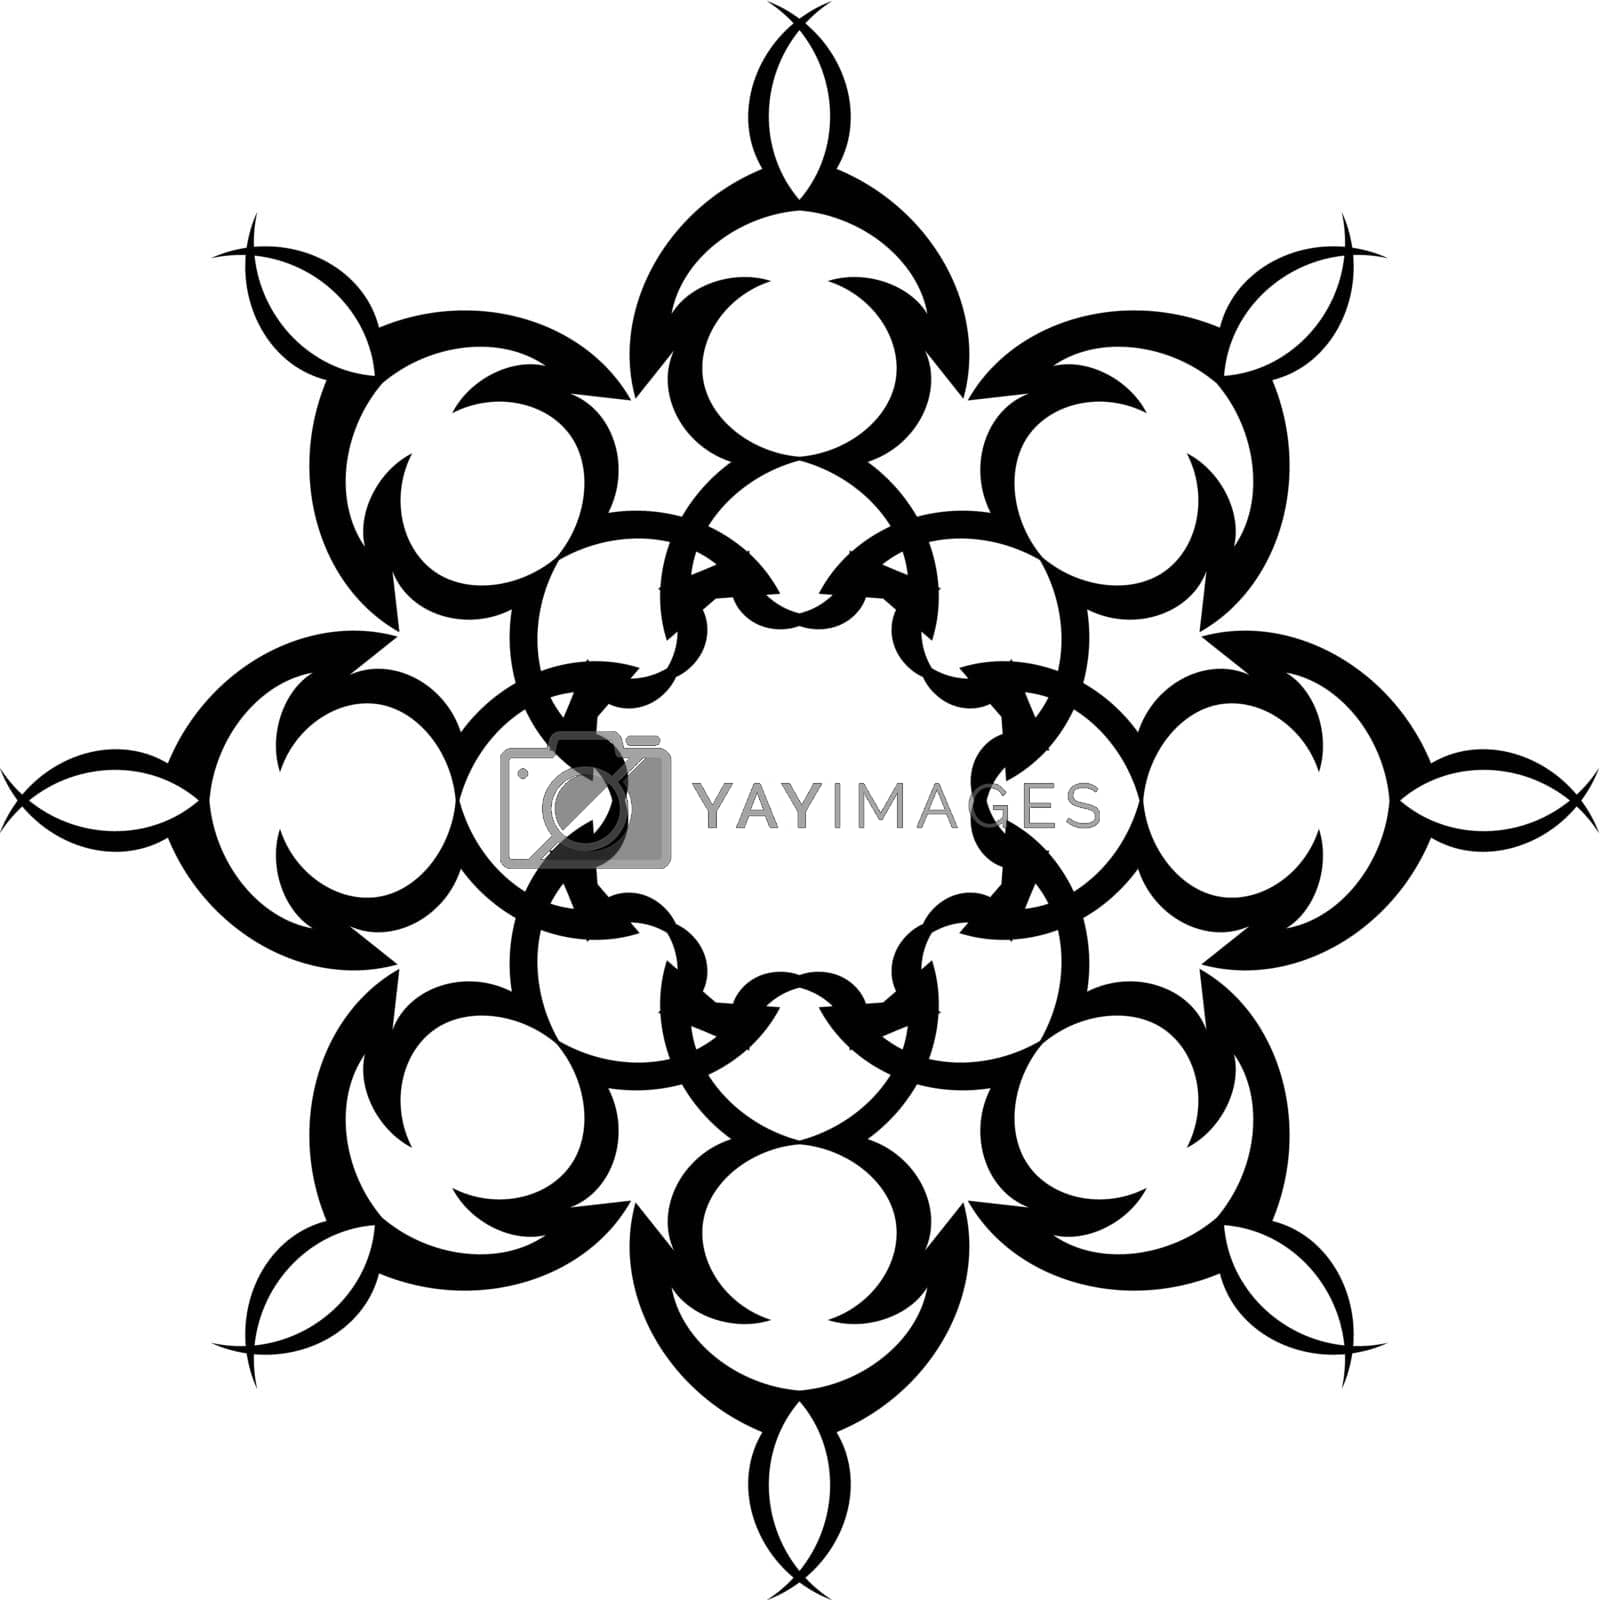 Royalty free image of line lotus flower or flower of life. sacred geometry. mandala ornament. esoteric or spiritual symbol. by Javvani